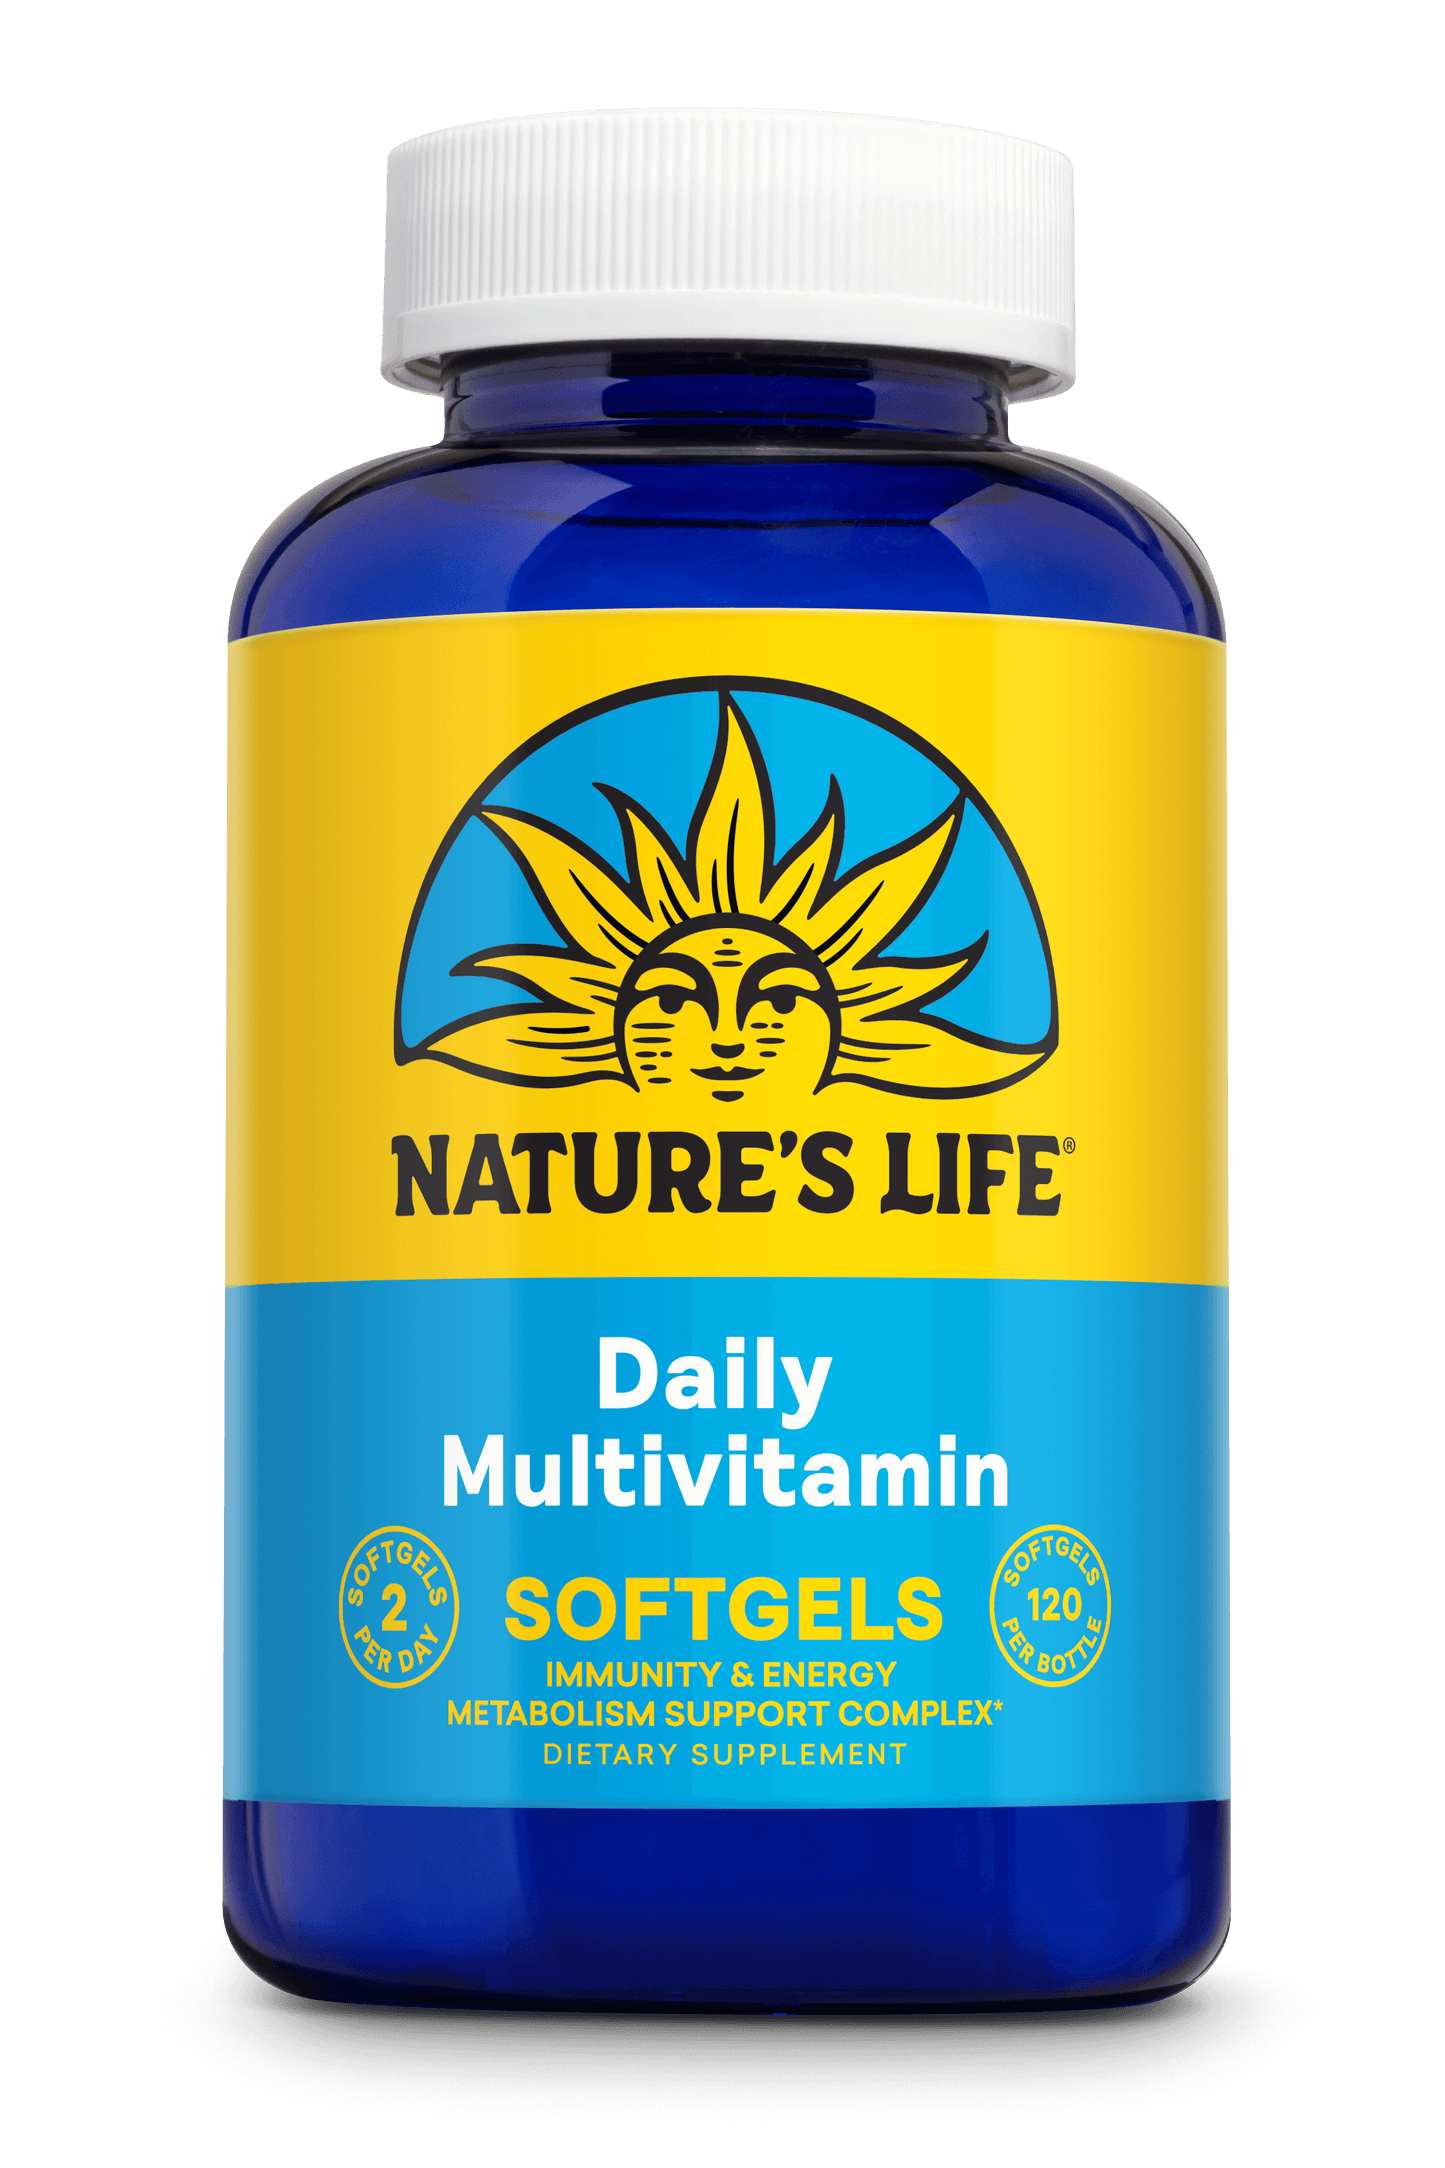 Daily Multivitamin Softgels